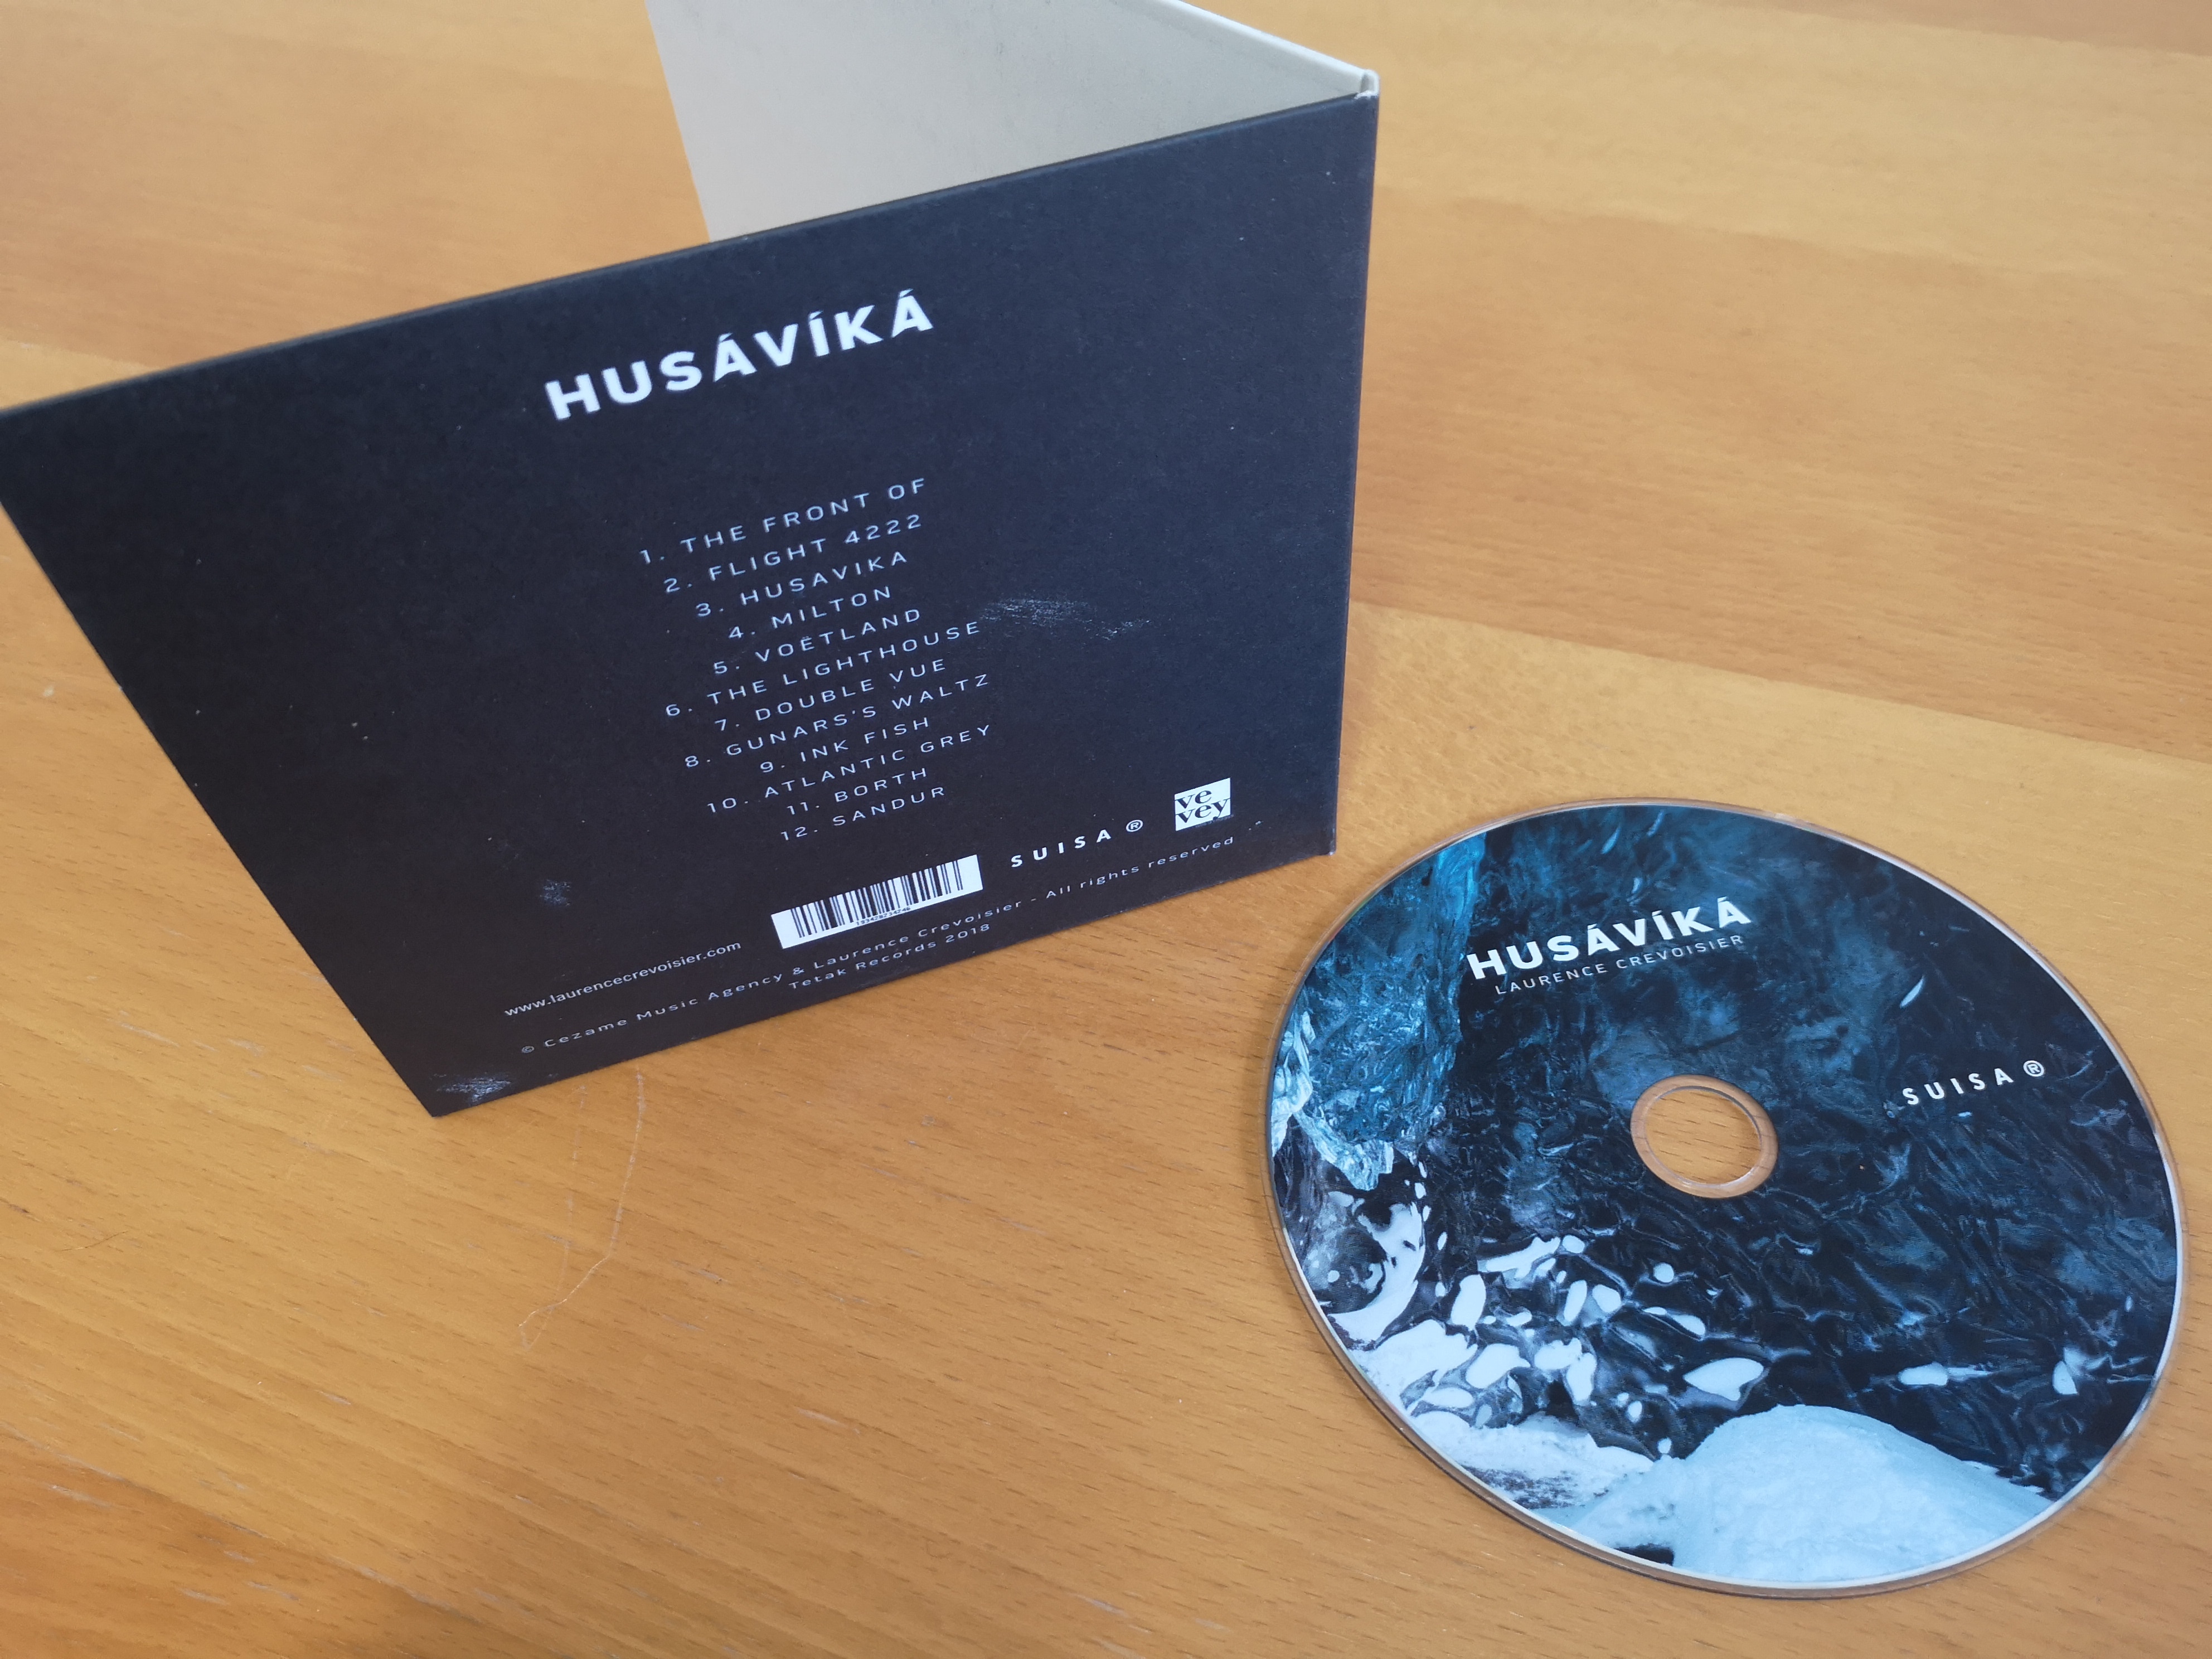 Design de CD -  Laurence Crevoisier - Album  Husavika